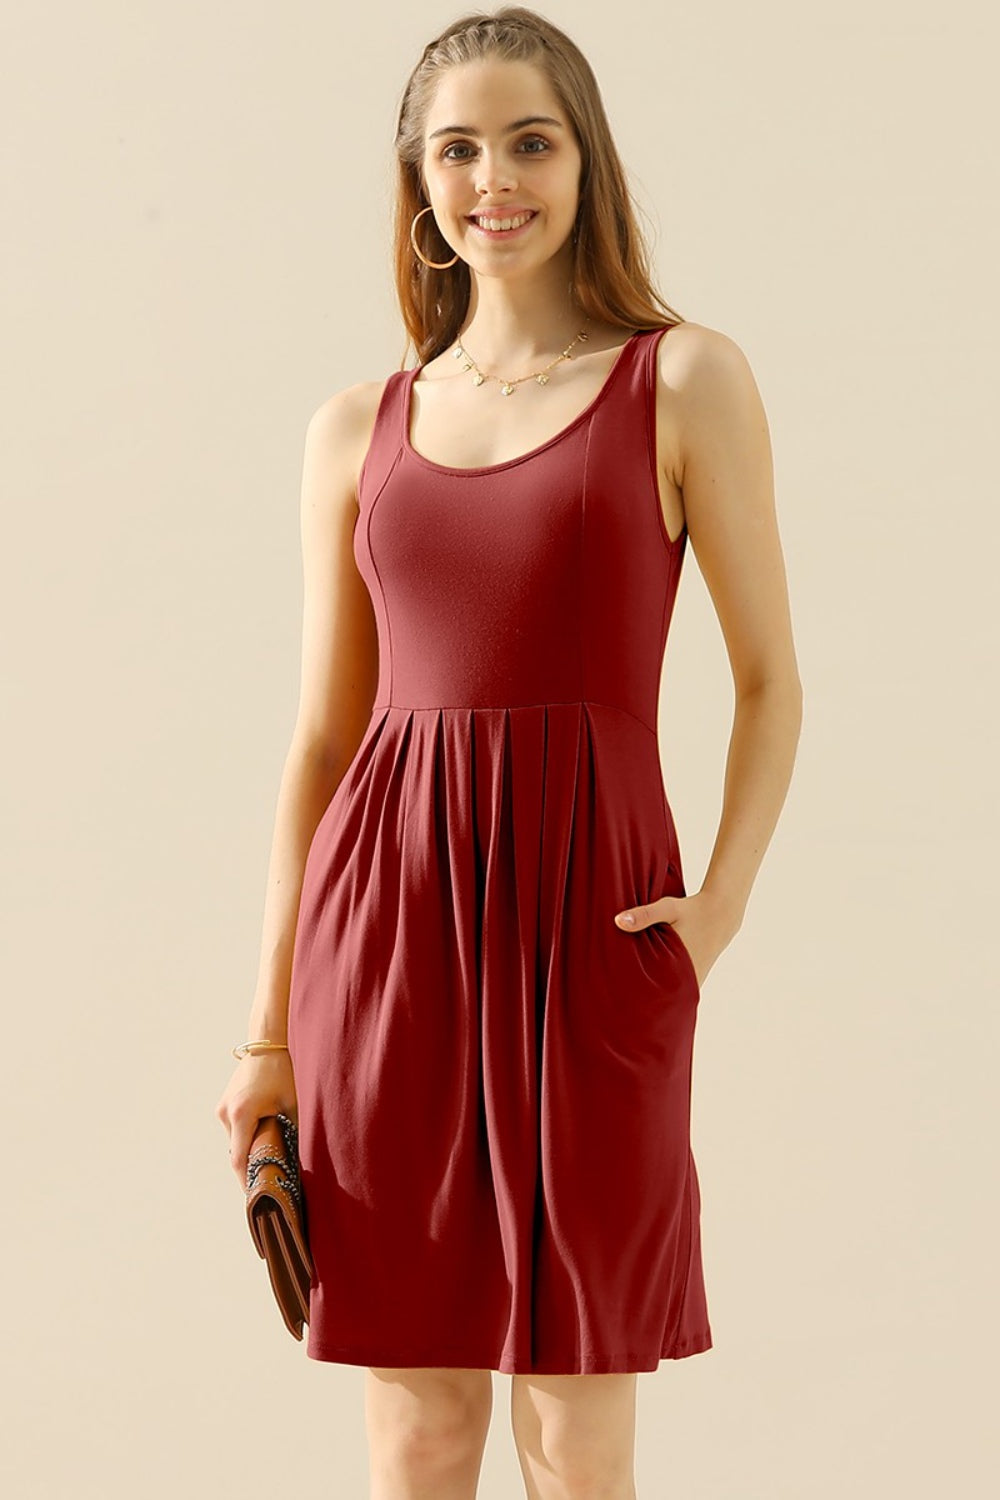 Doublju Full Size Round Neck Ruched Sleeveless Dress with Pockets - SELFTRITSS